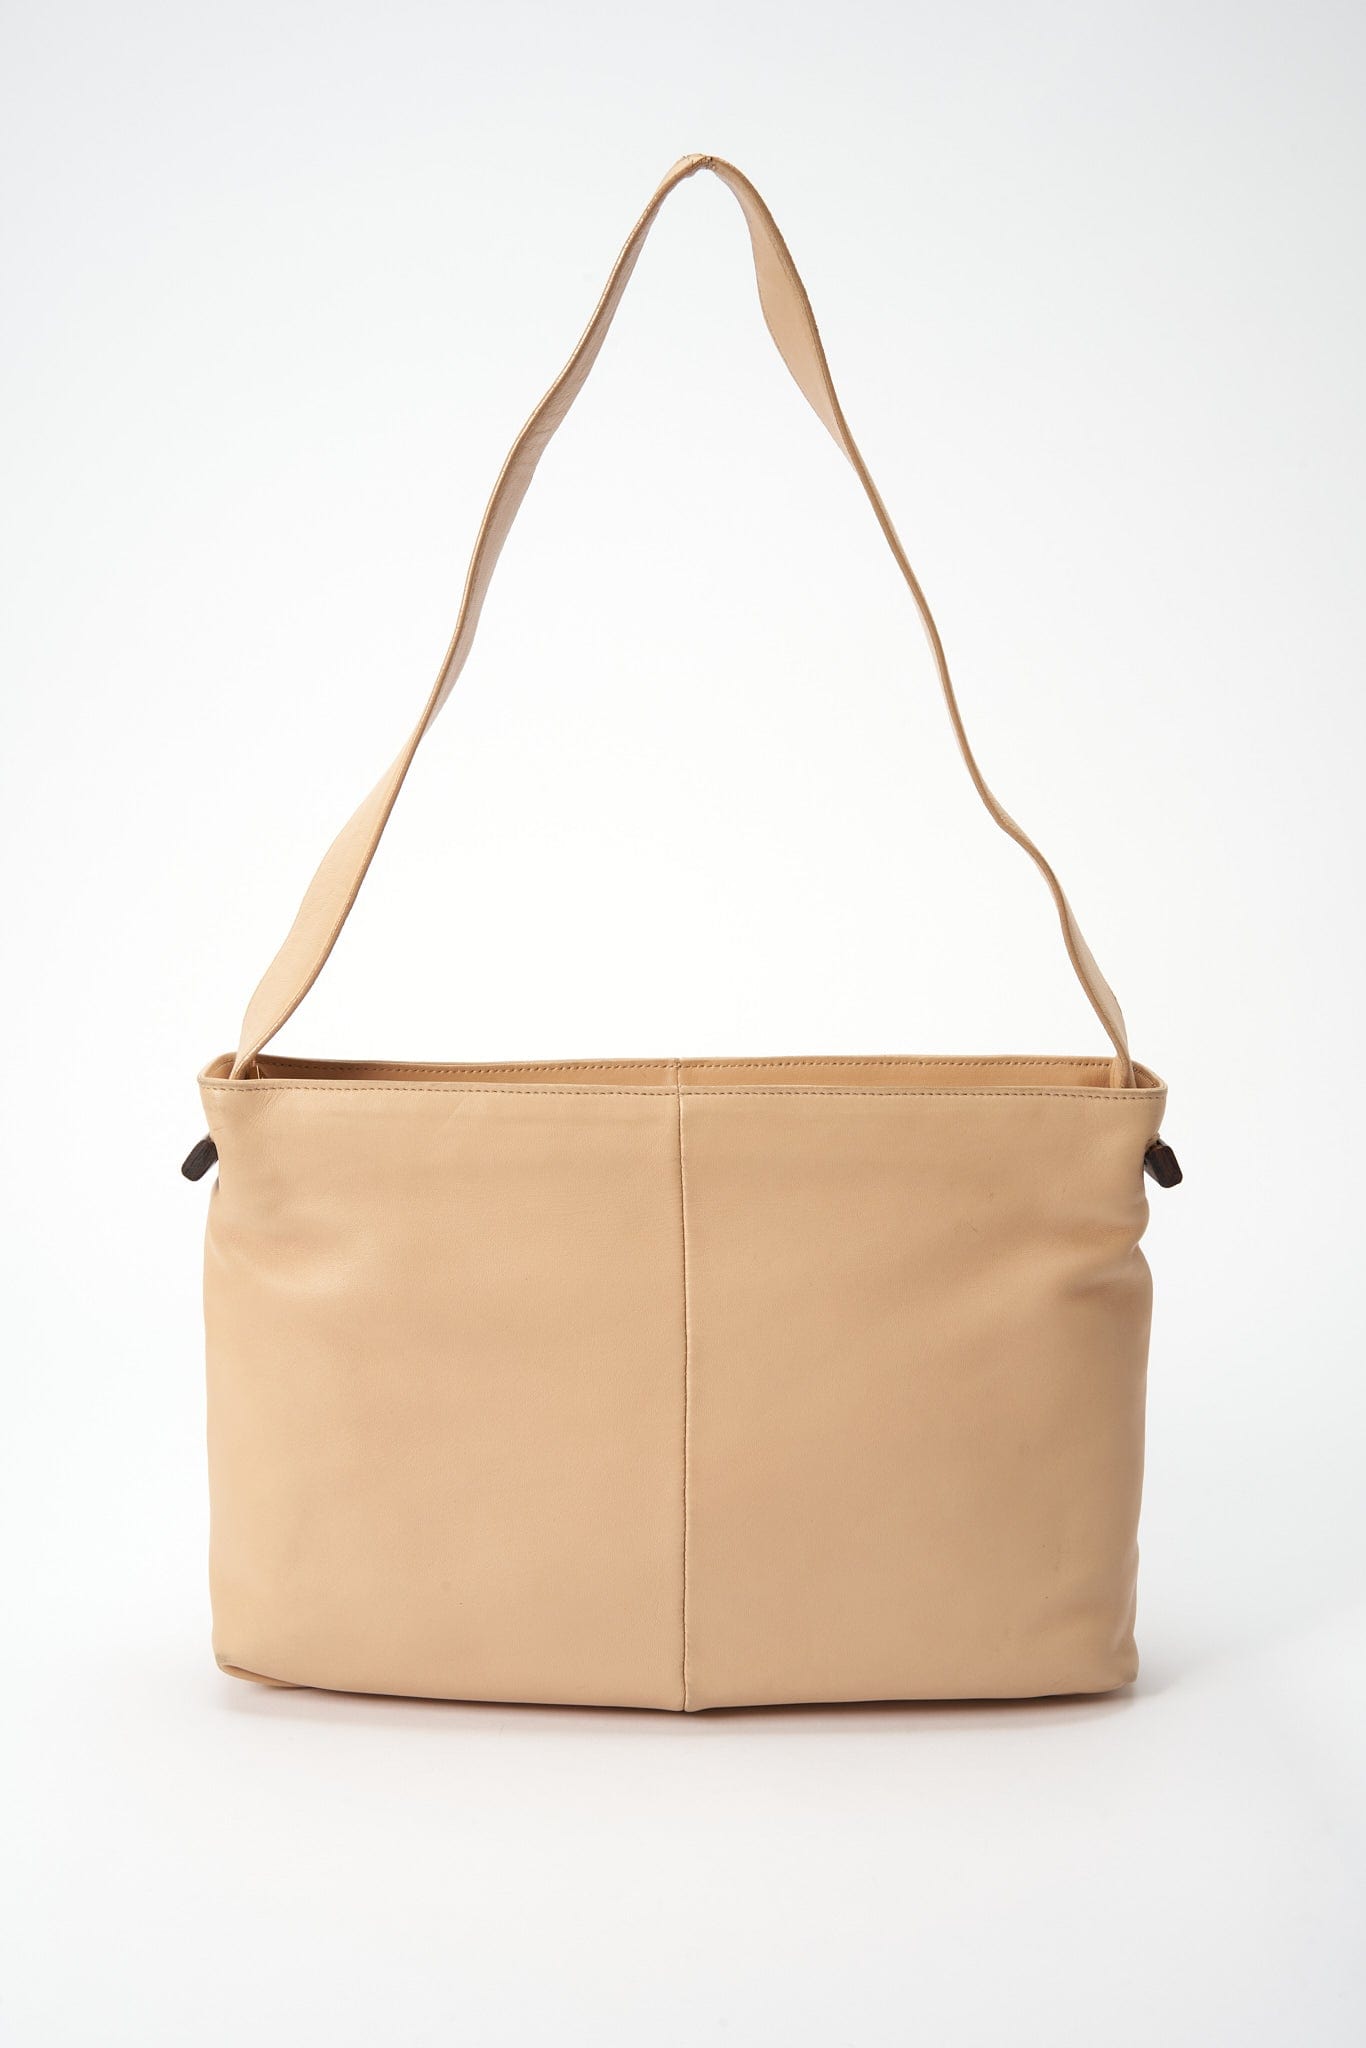 Womens Vintage Tan Leather Shoulder Cross body Bag